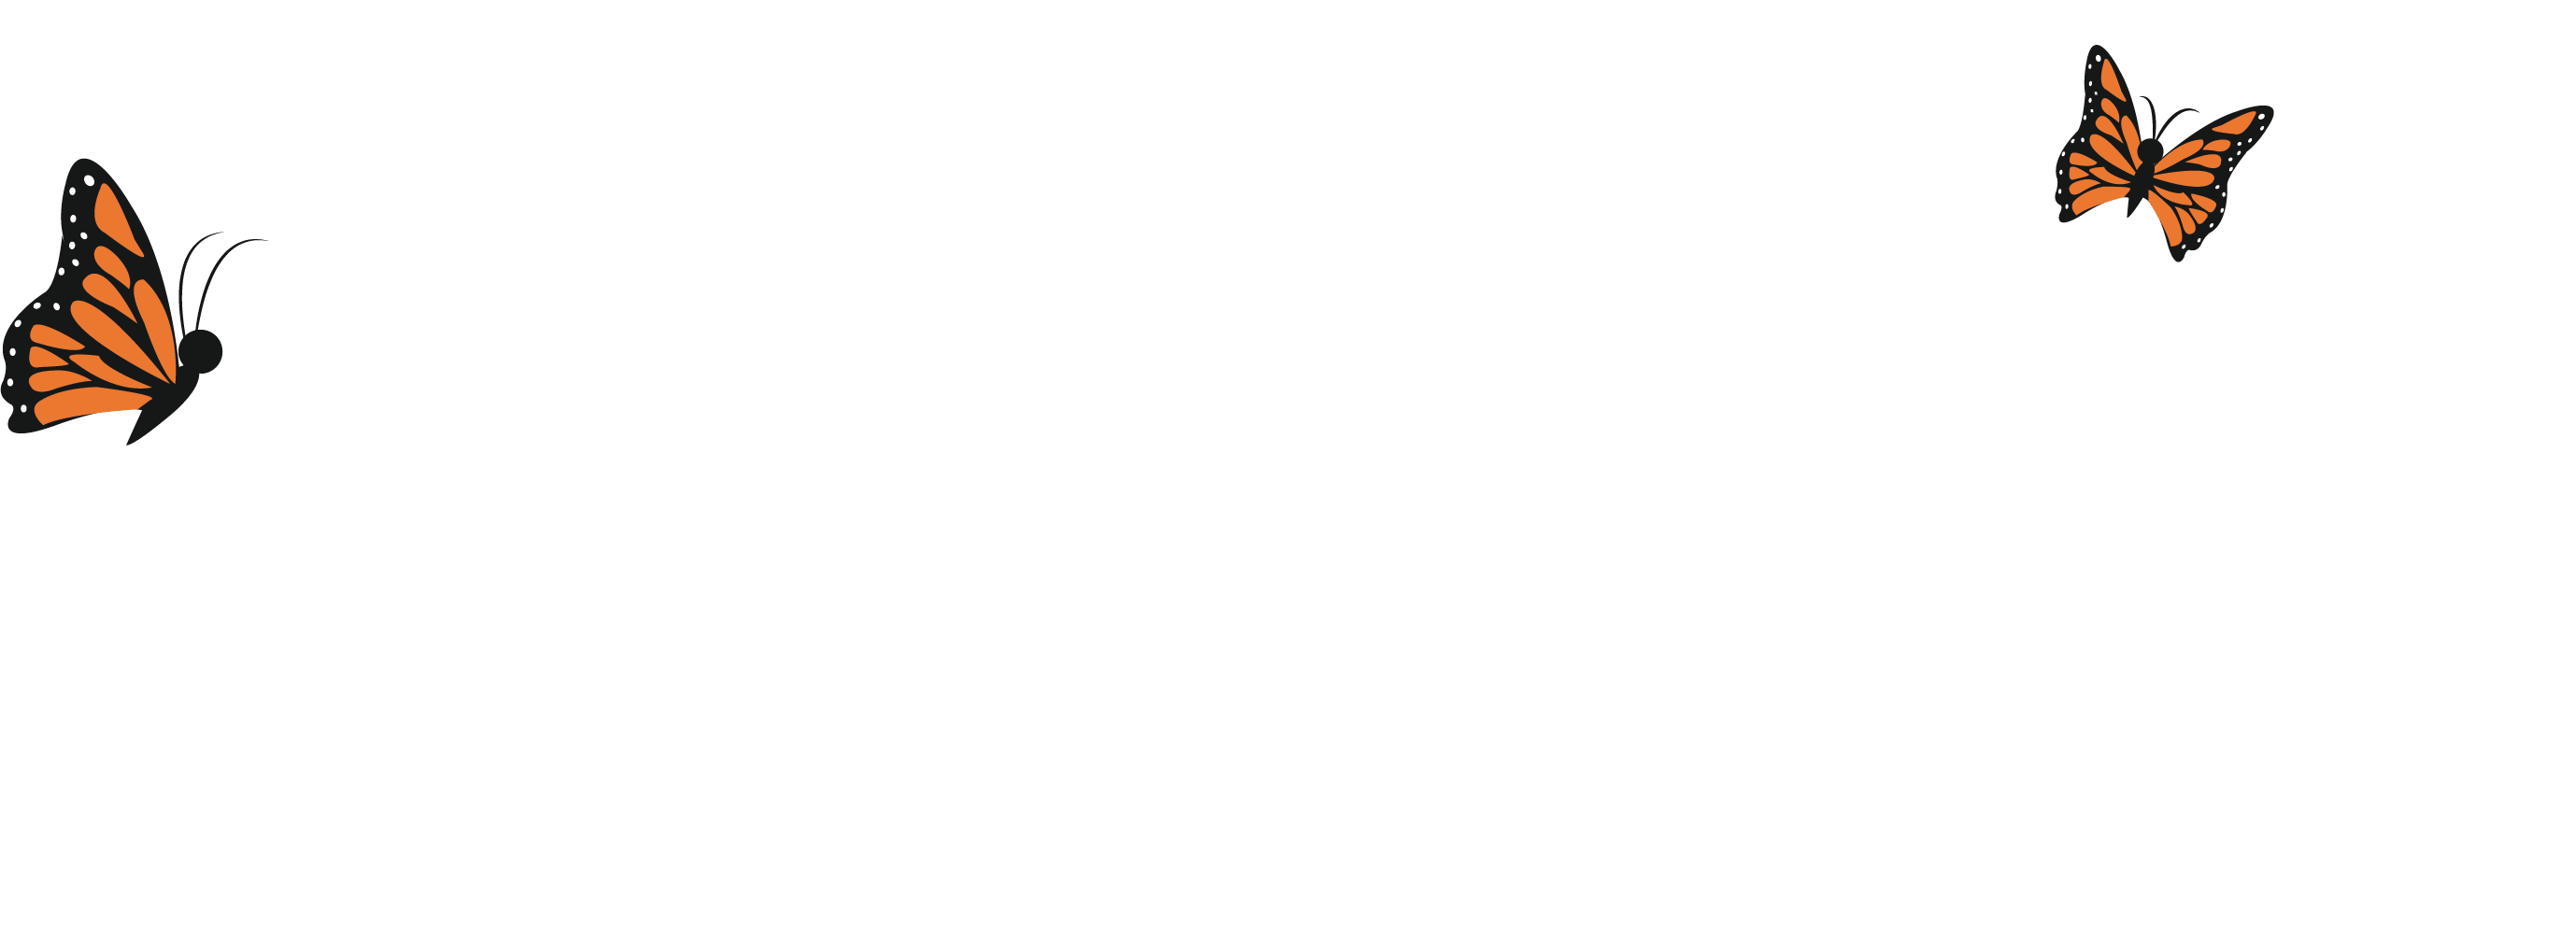 Filarmonía Vallesana's Logo